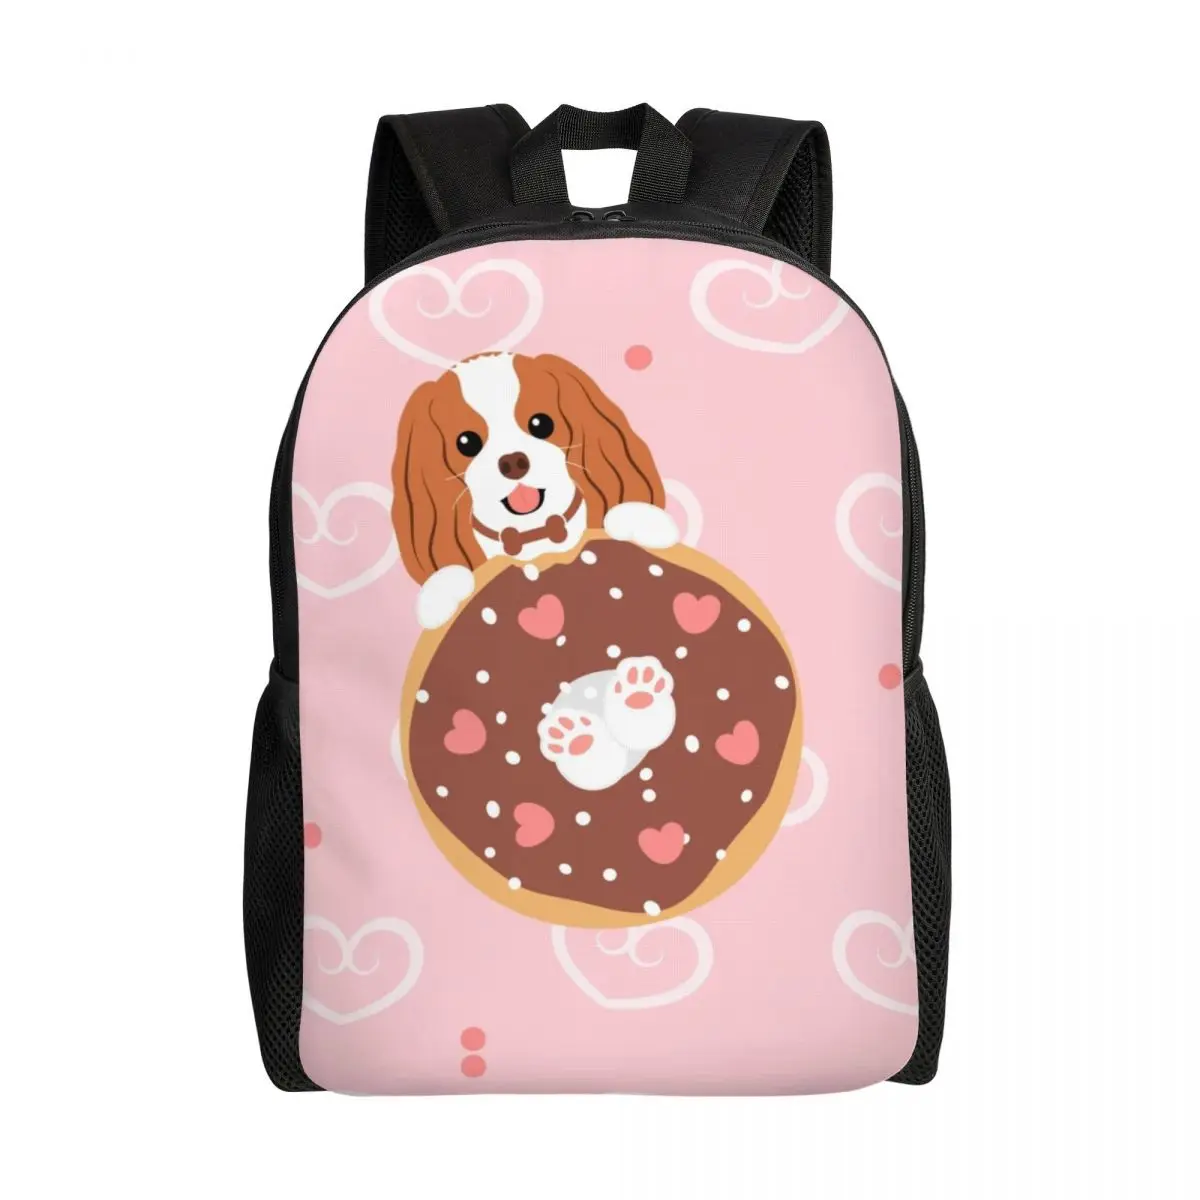 

Love Cavalier King Charles Spaniel Donut Backpack for Girls Boys Dog College School Travel Bags Bookbag Fits 15 Inch Laptop